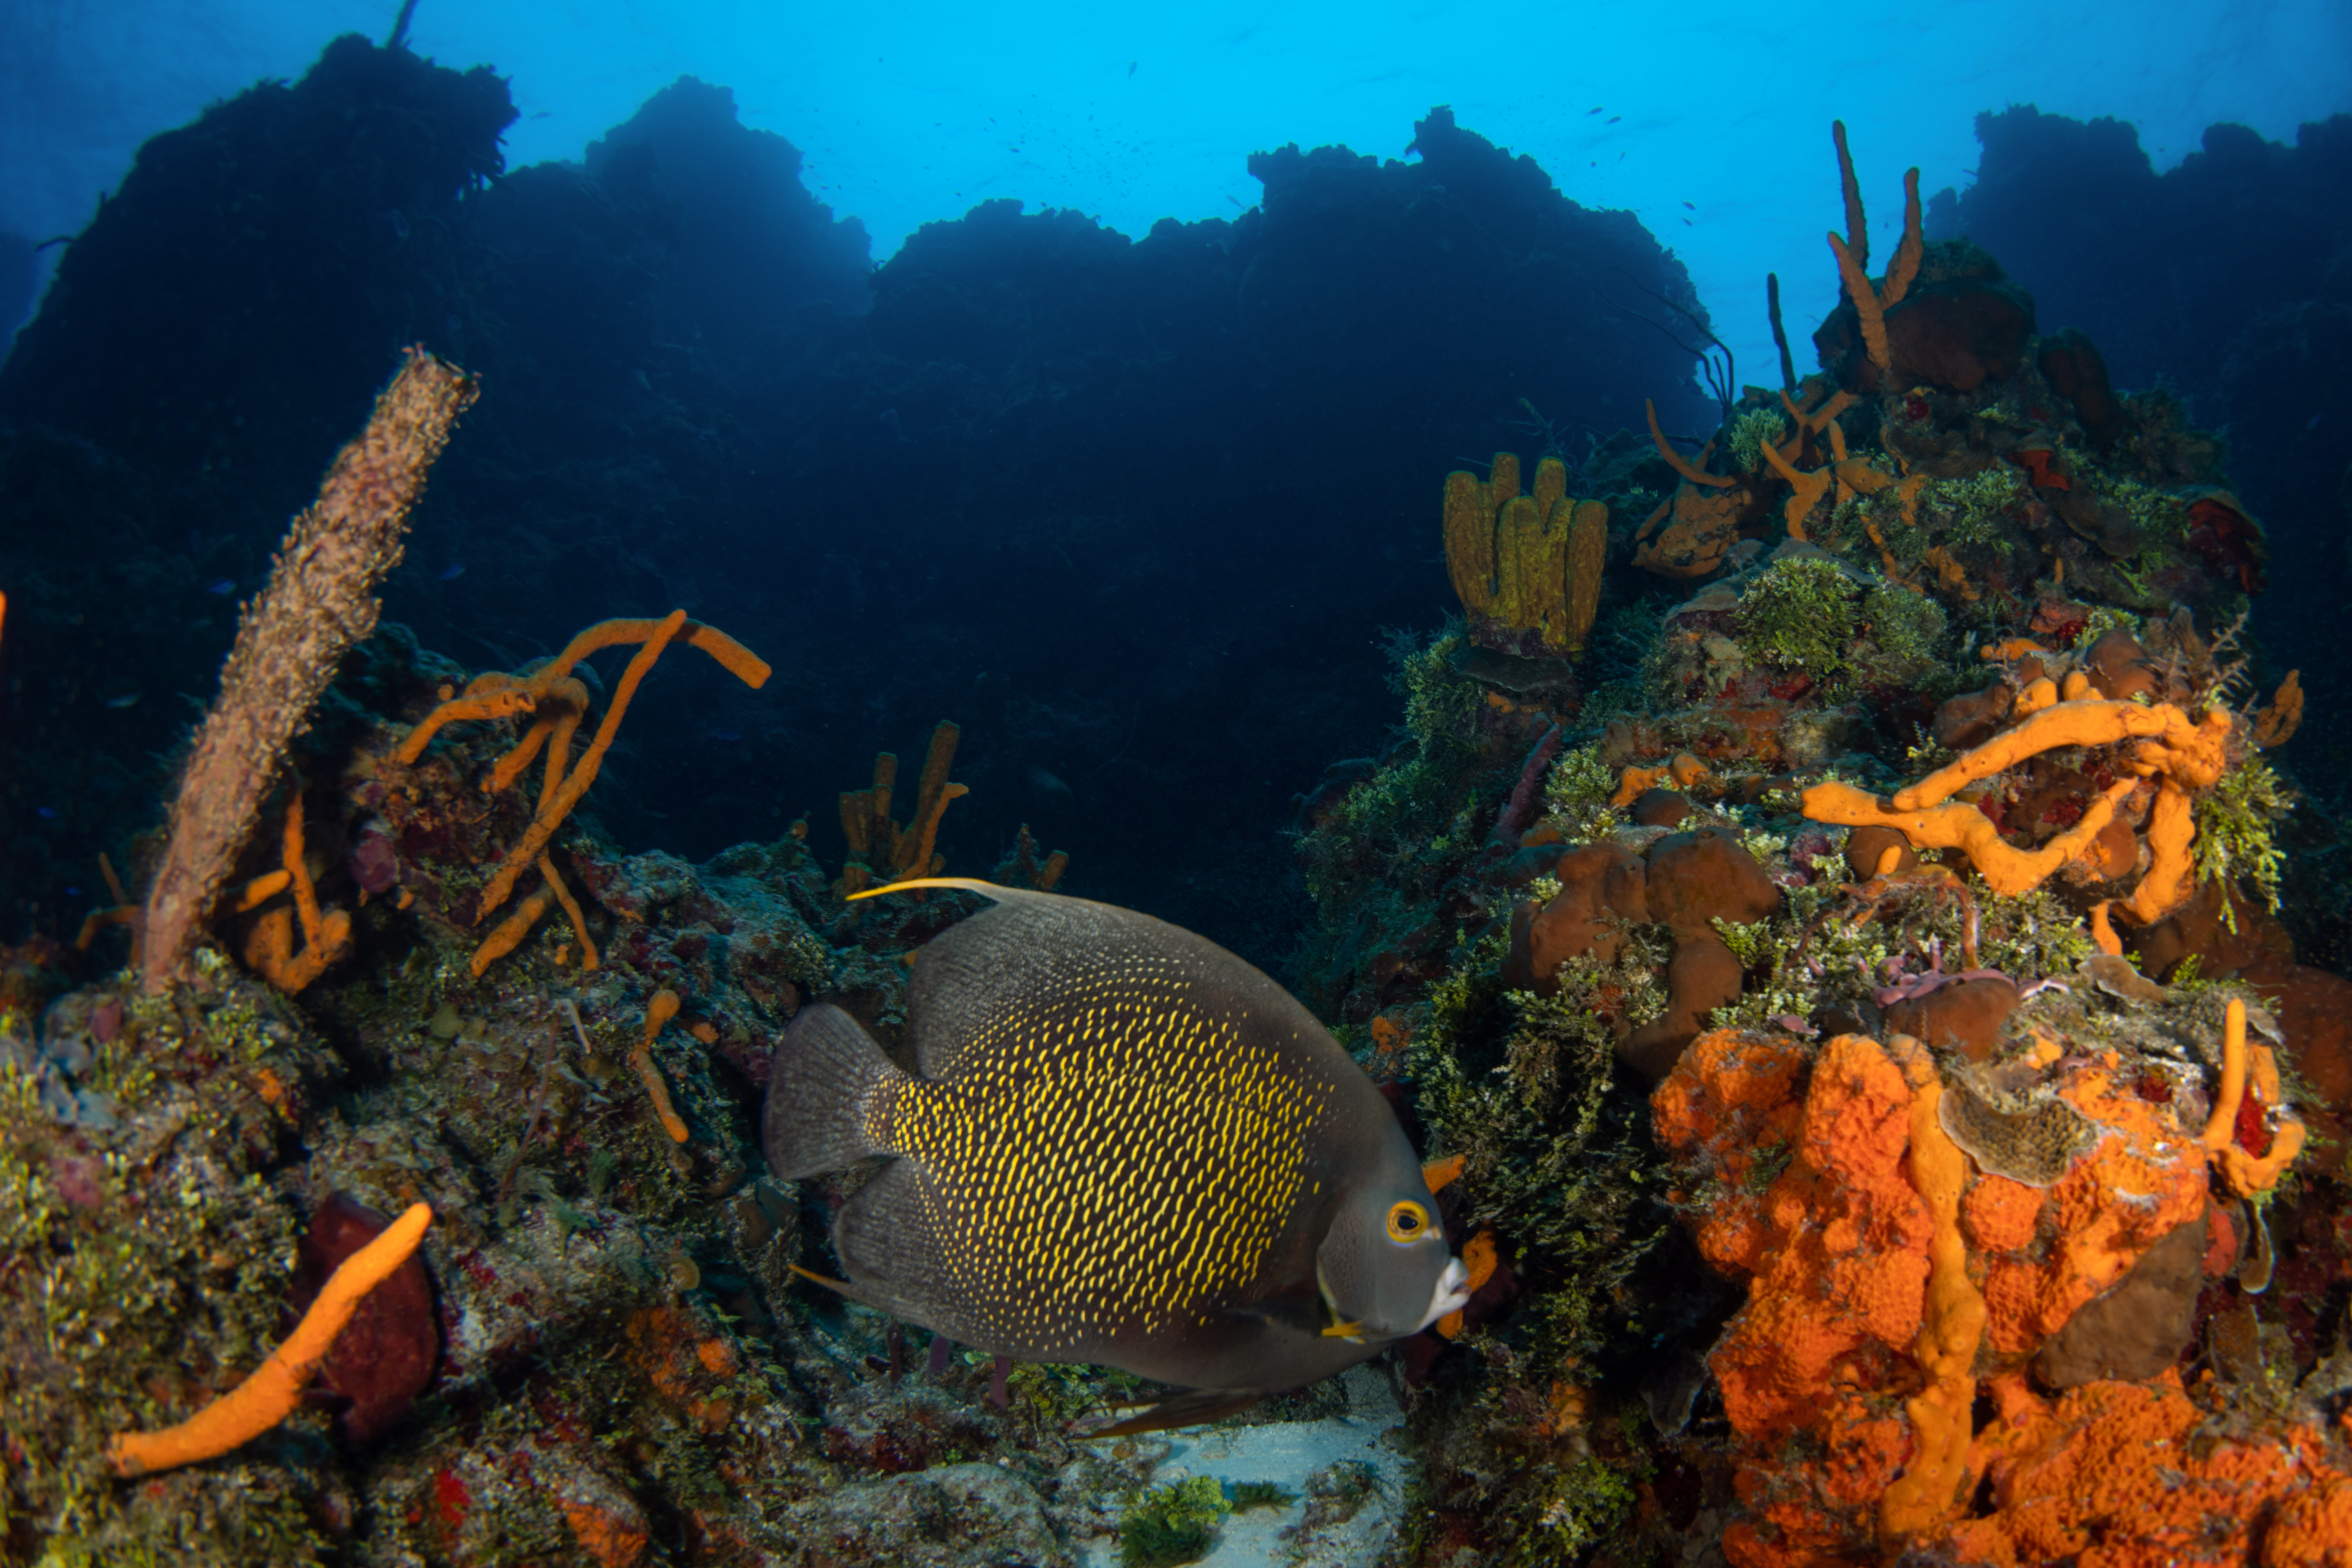 French angelfish among sponges. Photo by Brandi Mueller